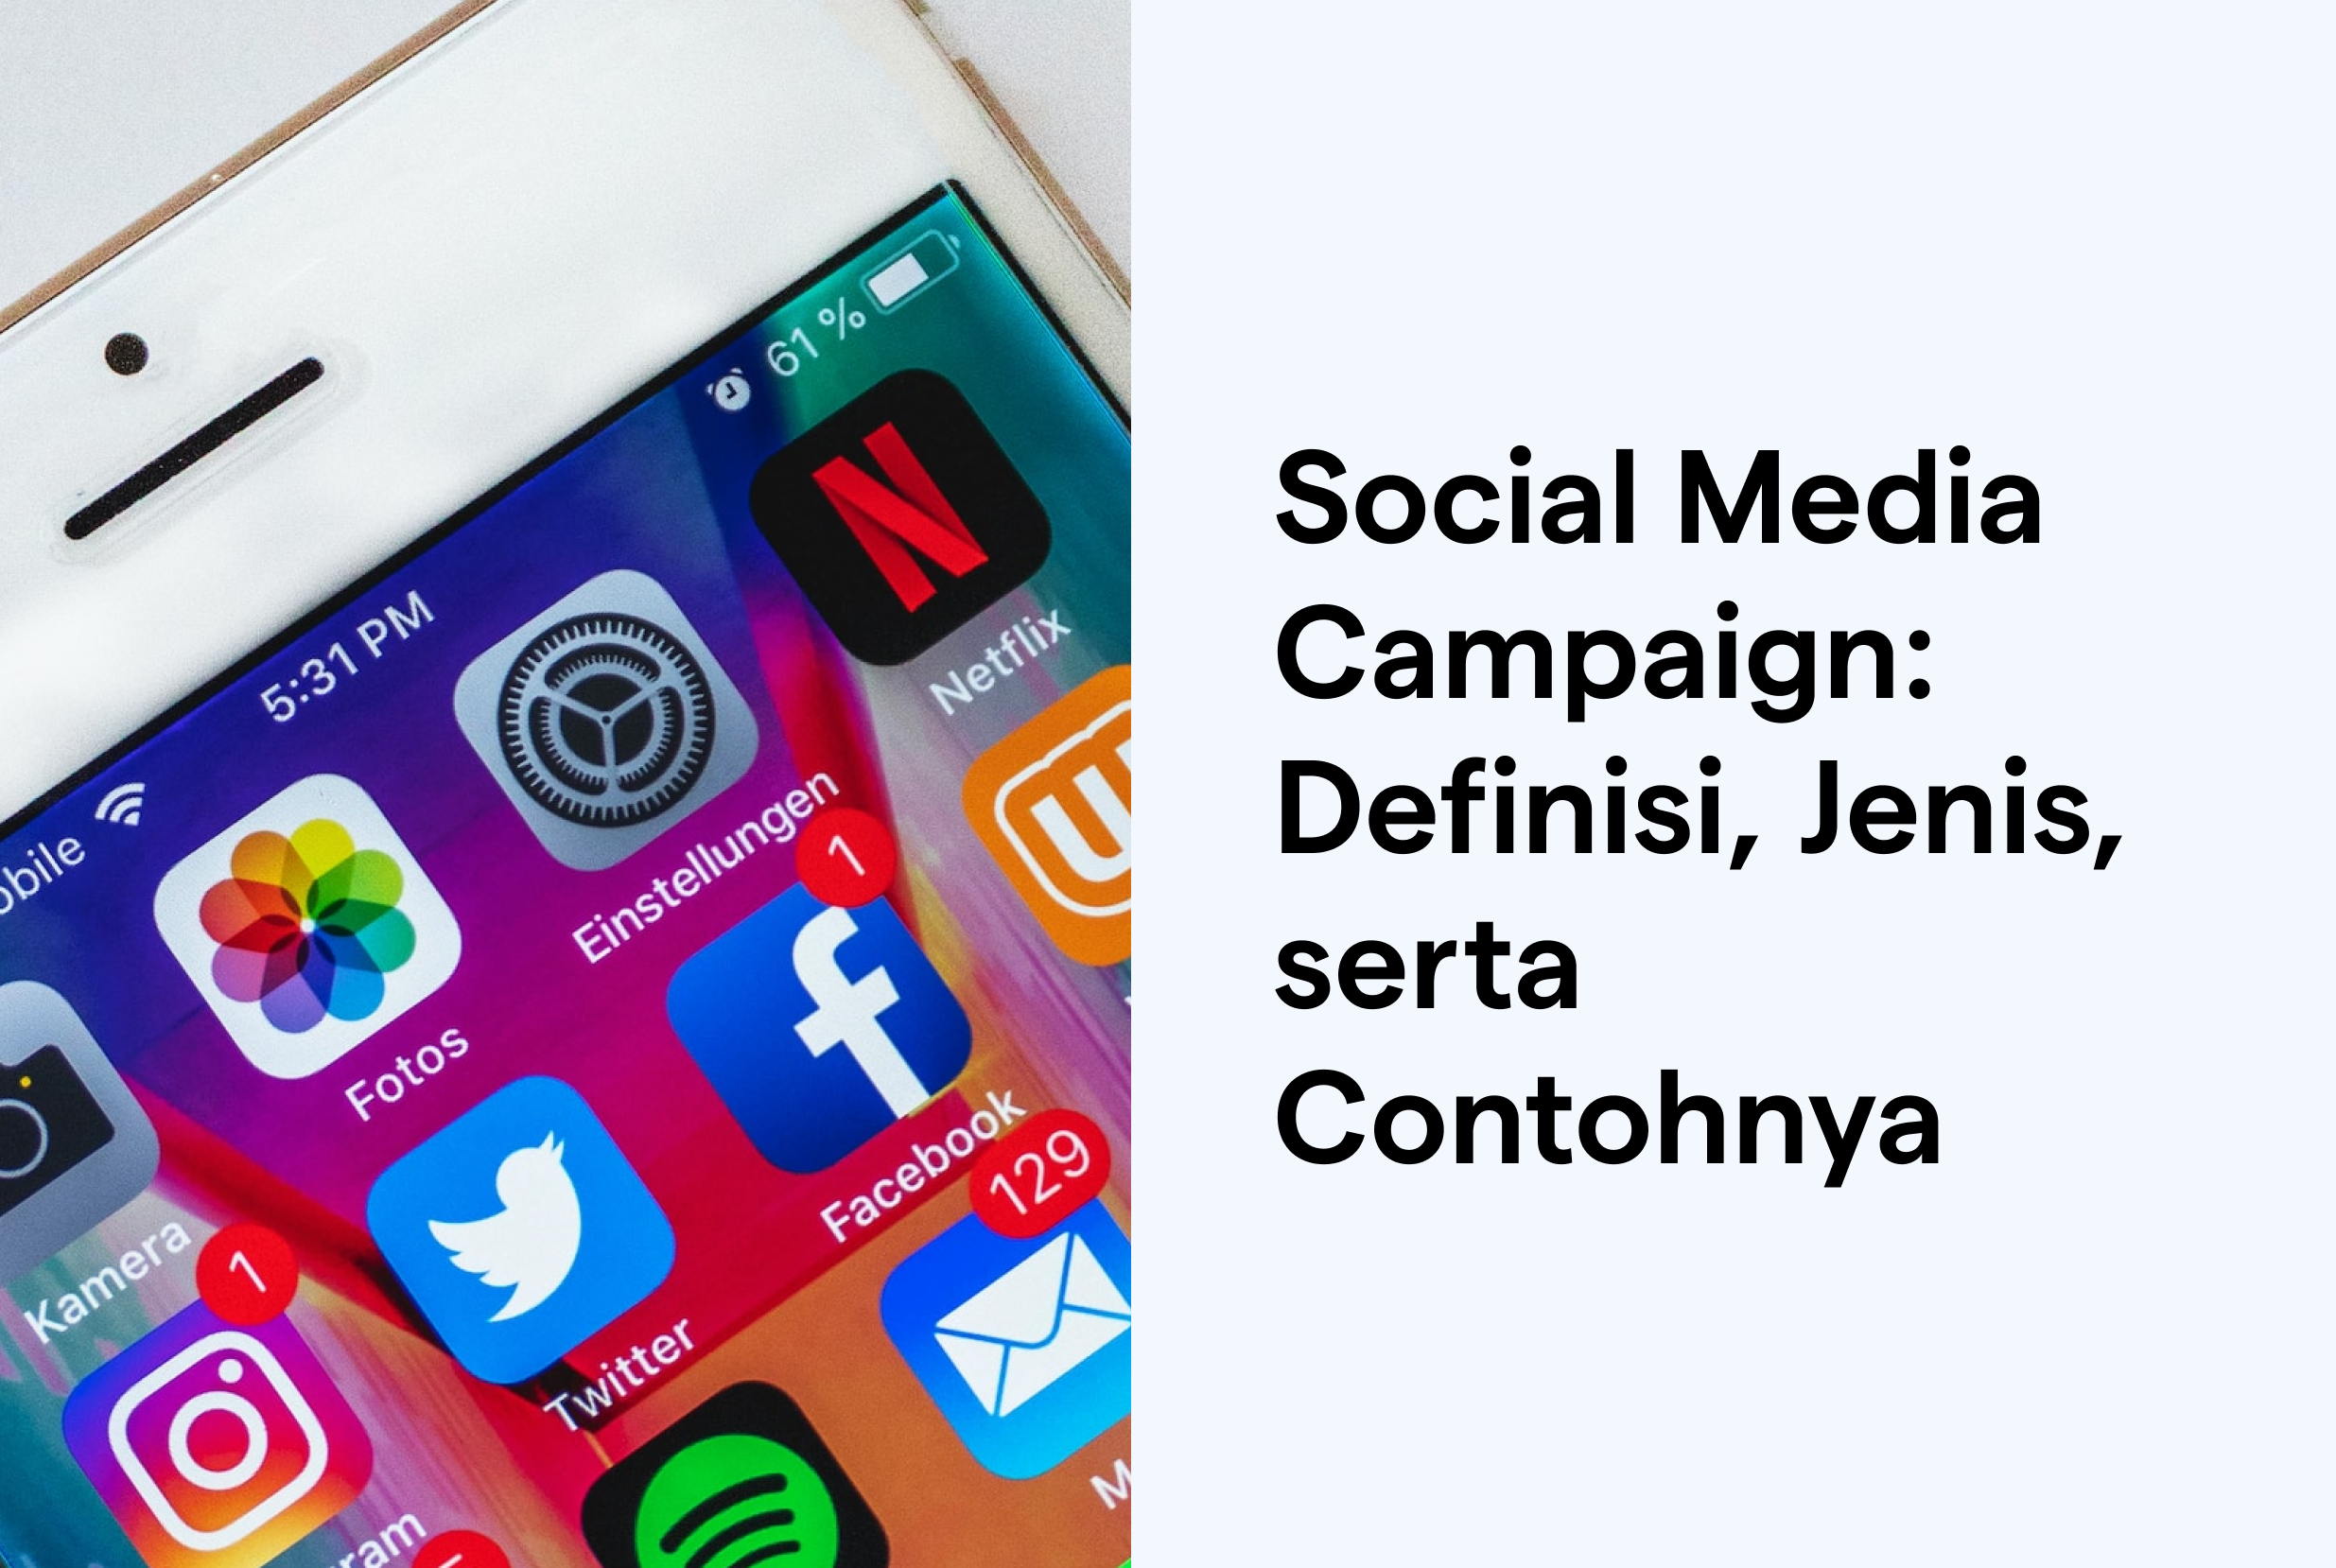 Social Media Campaign: Definisi, jenis, dan contoh campaign